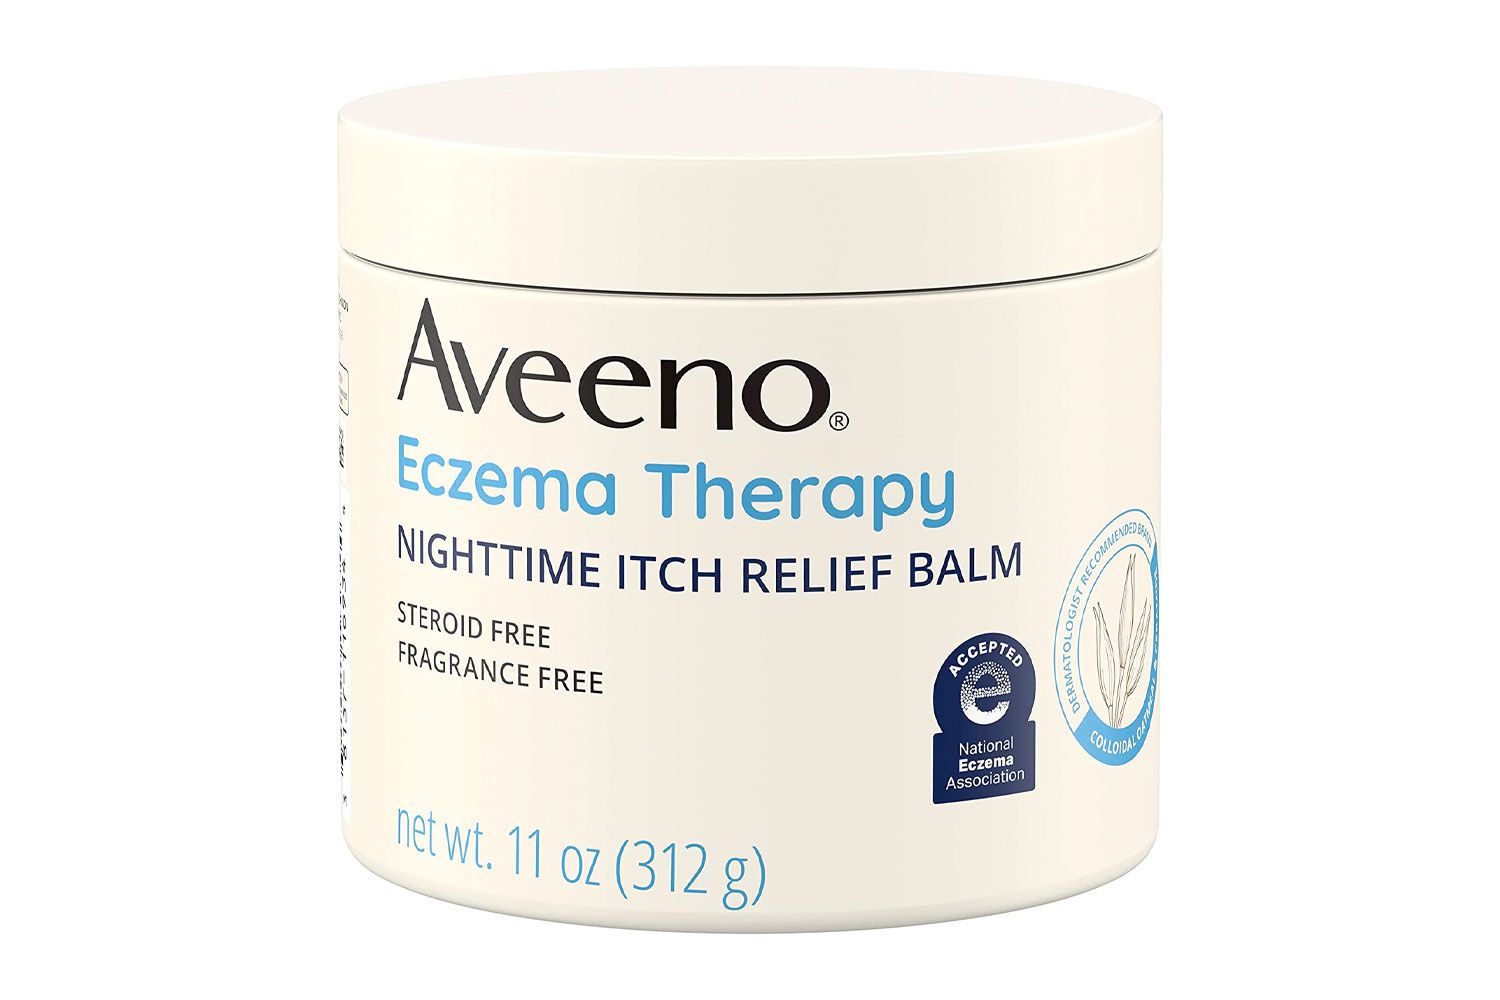 Aveeno Eczema Therapy Nighttime Itch Relief Balm